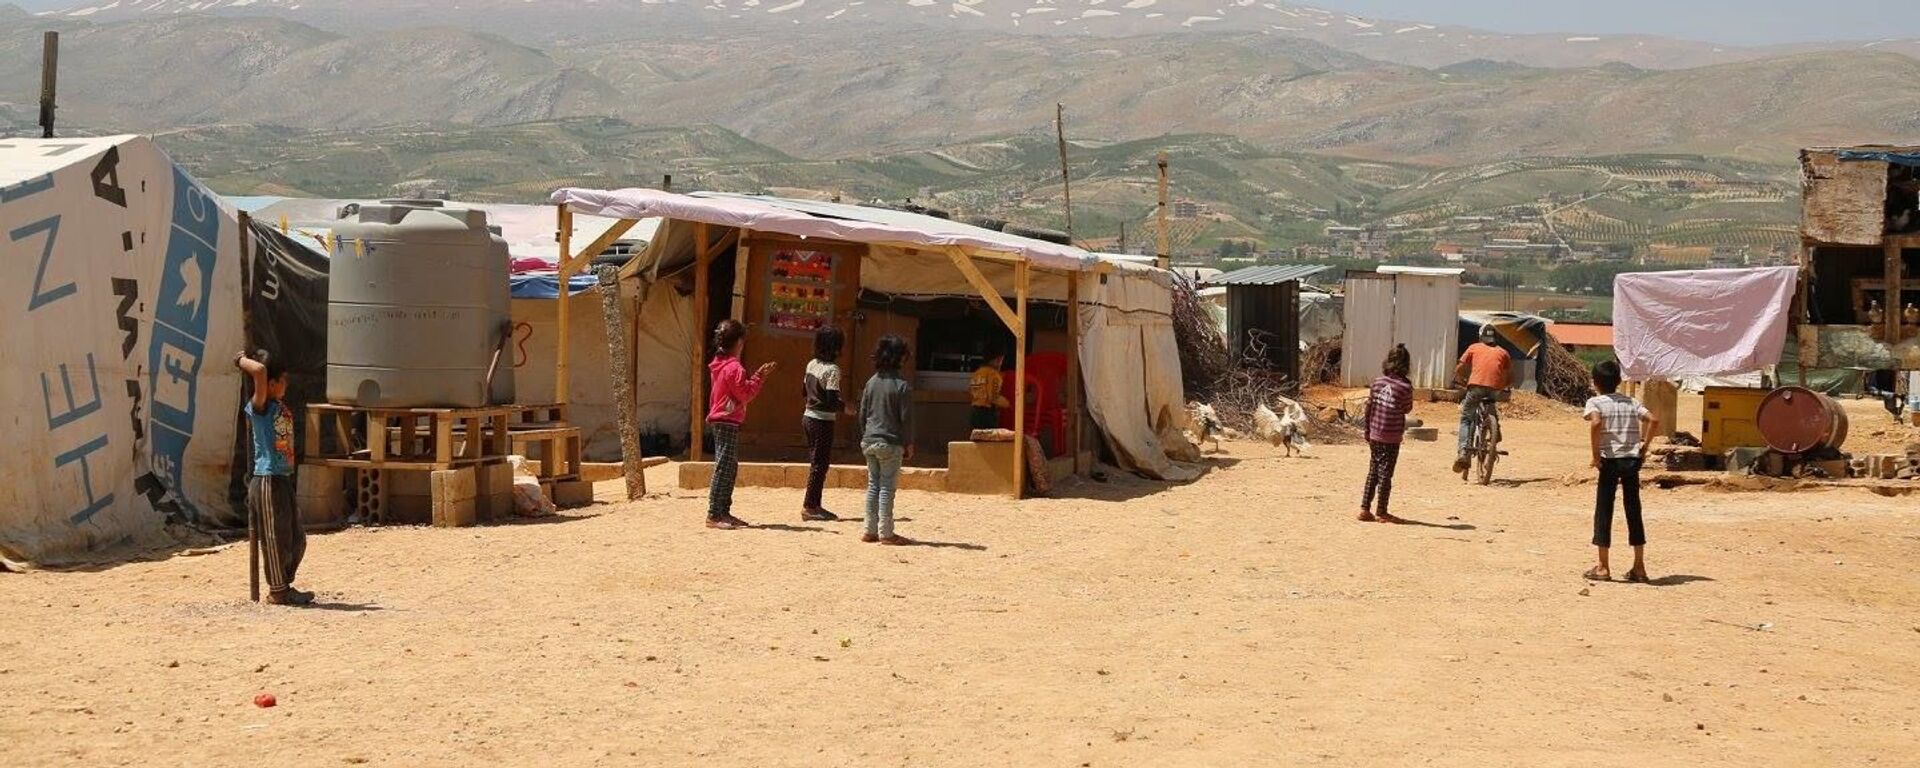 مخيم لاجئين في لبنان - سبوتنيك عربي, 1920, 04.02.2021